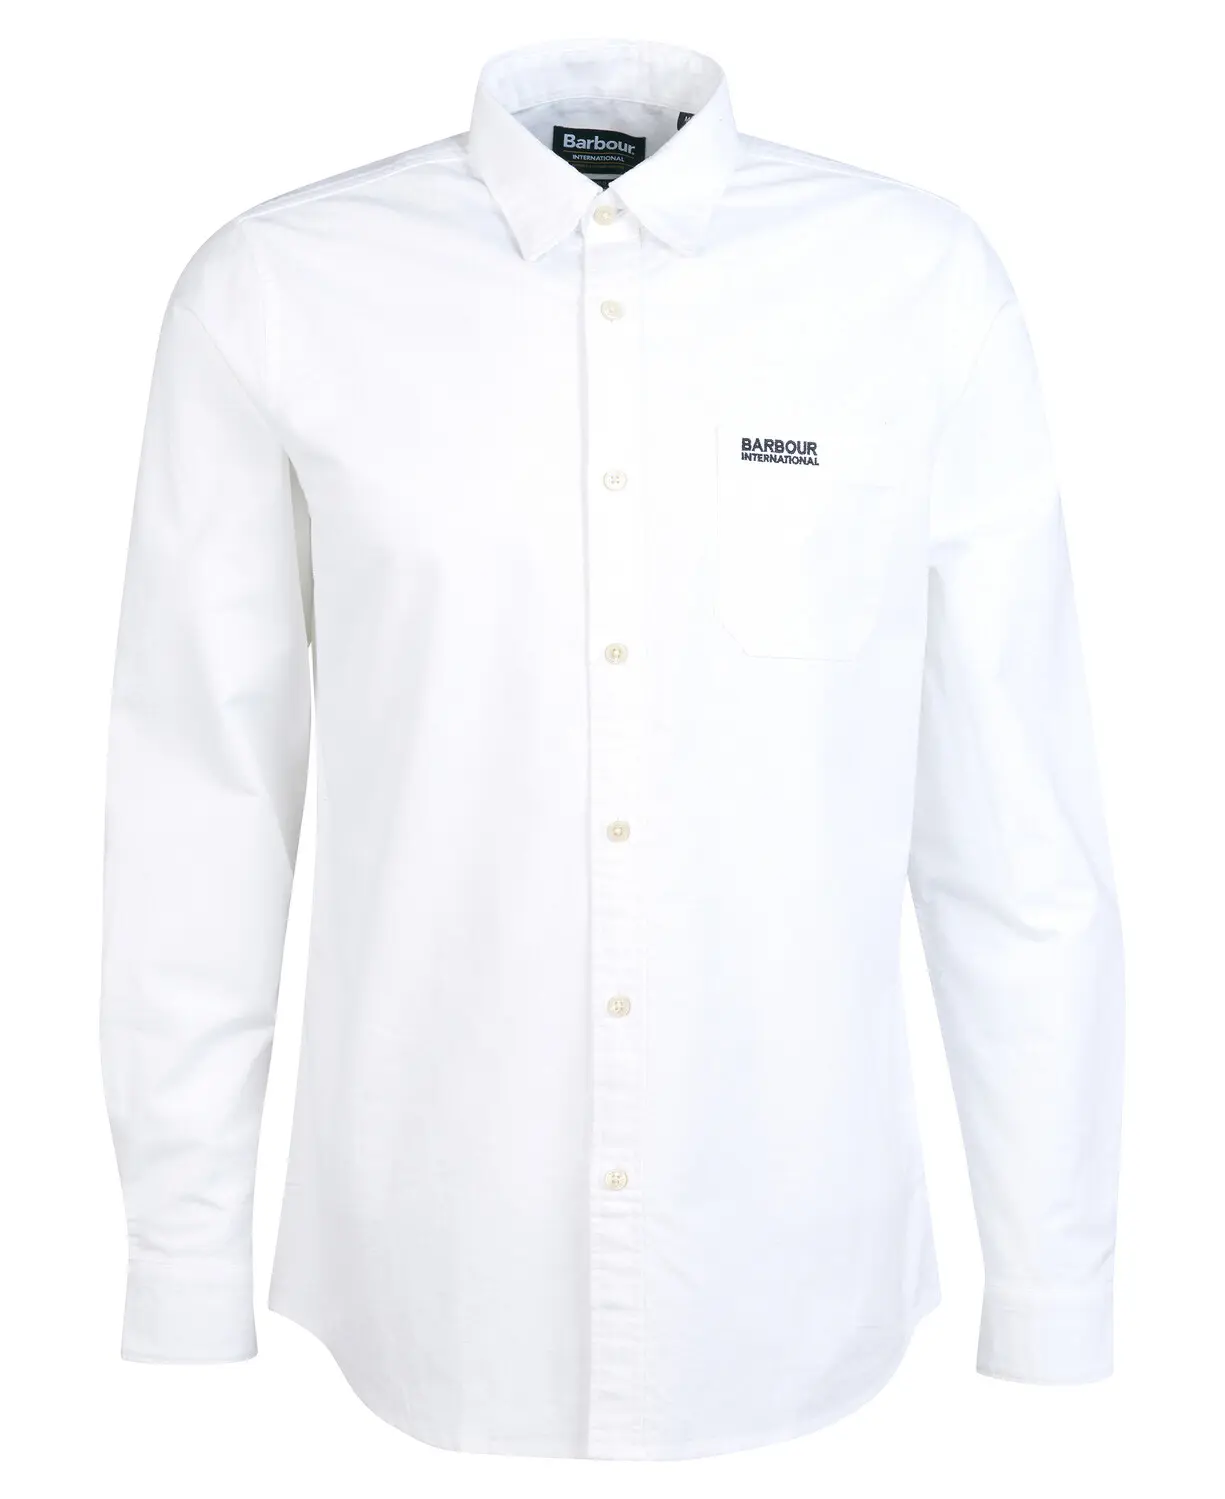 Barbour Barbour International Kinetic Shirt White